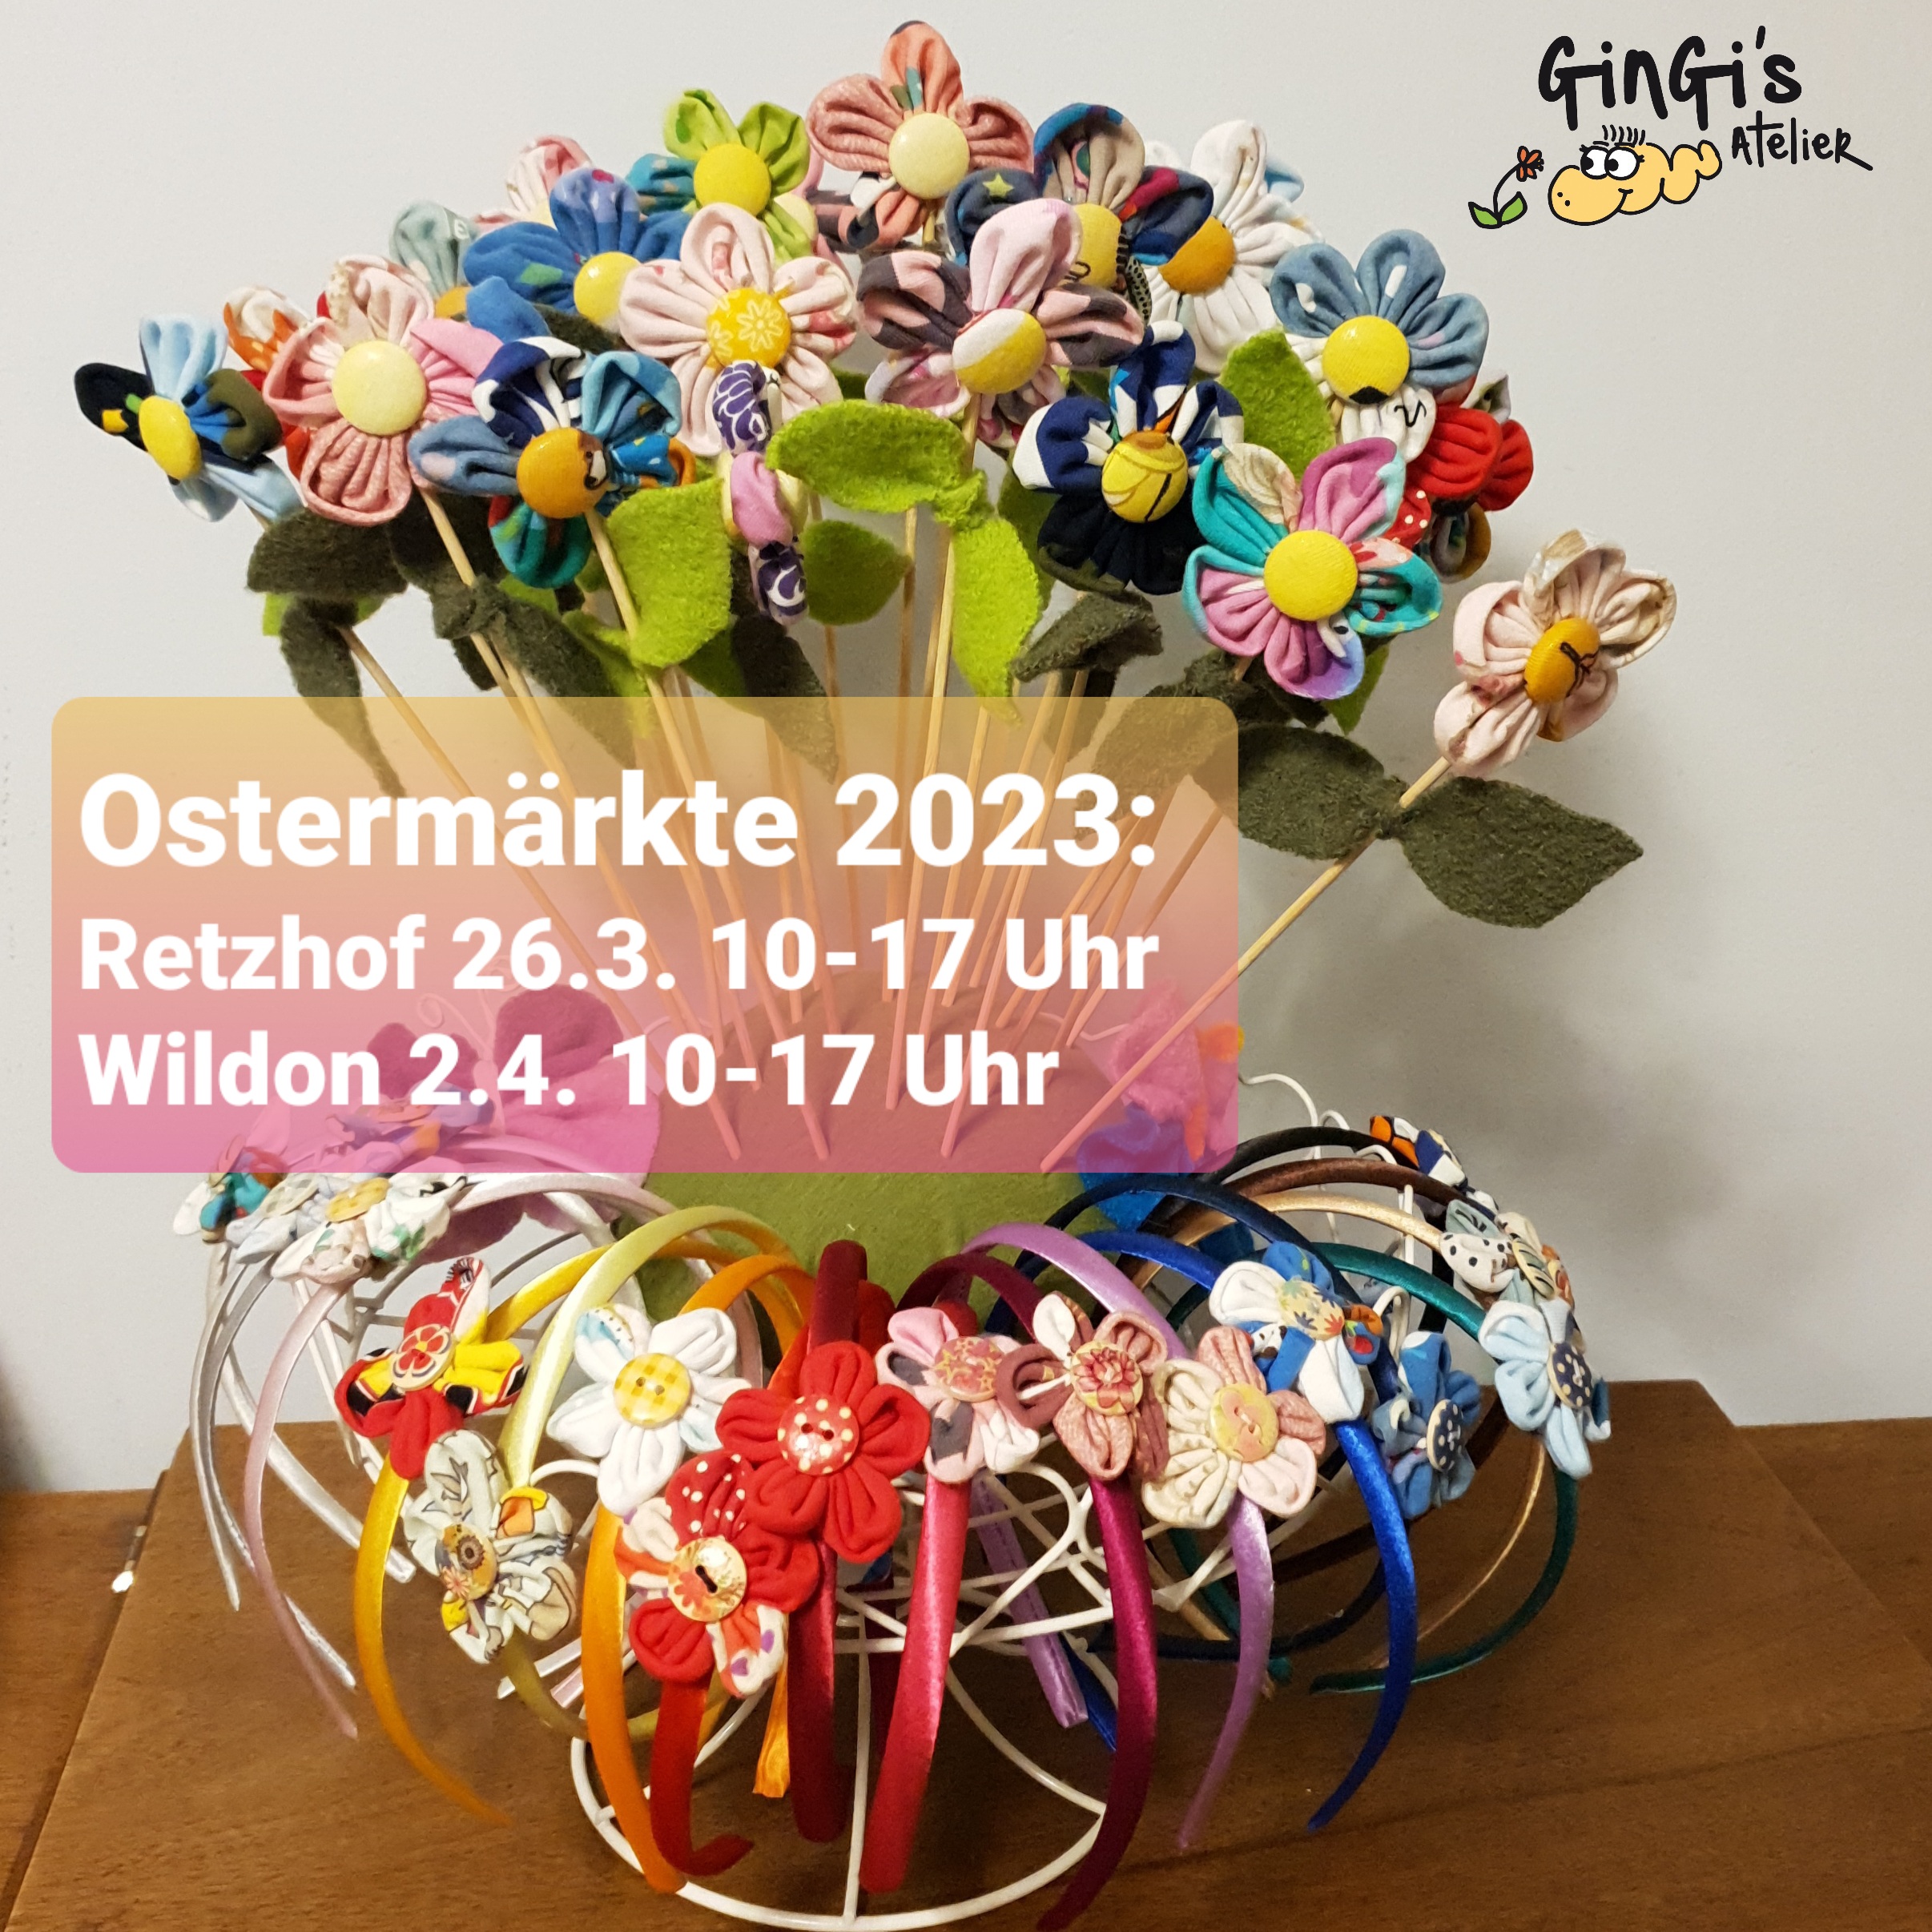 Featured image for “Ostermärkte 2023”